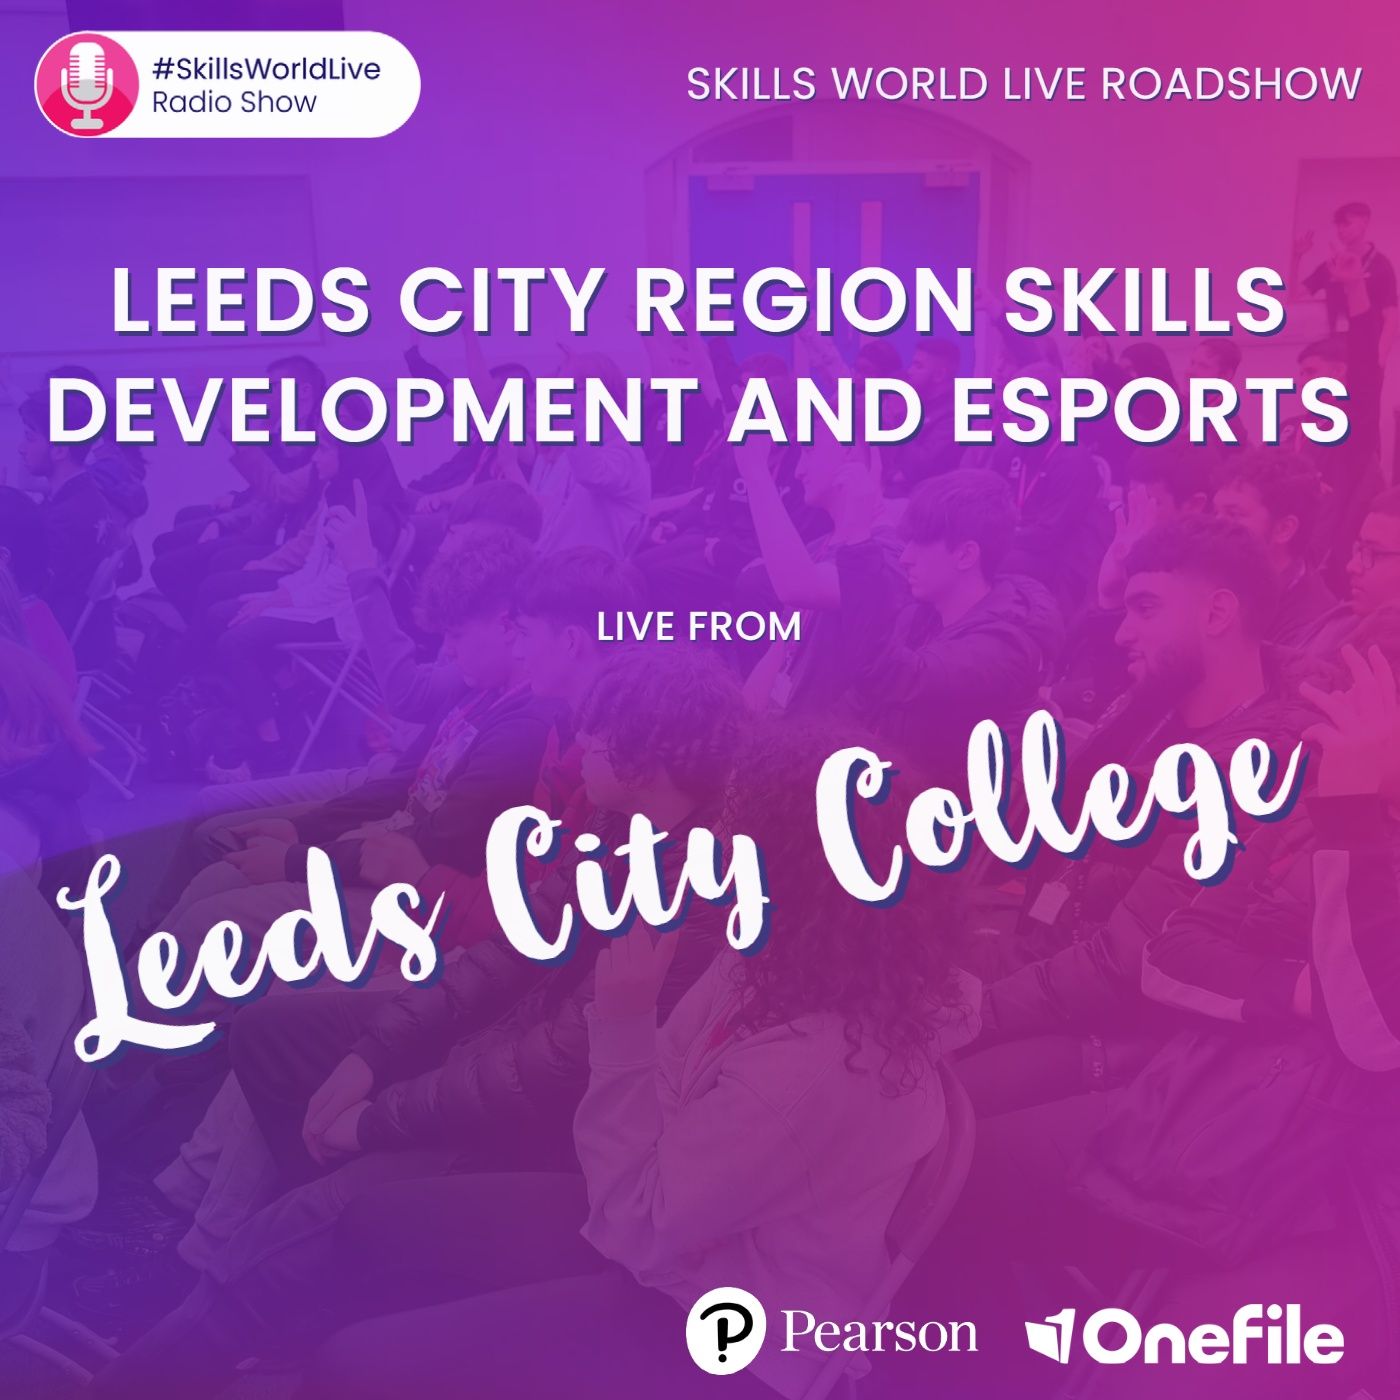 Skills World Live Roadshow: Leeds City Region Skills Development and esports